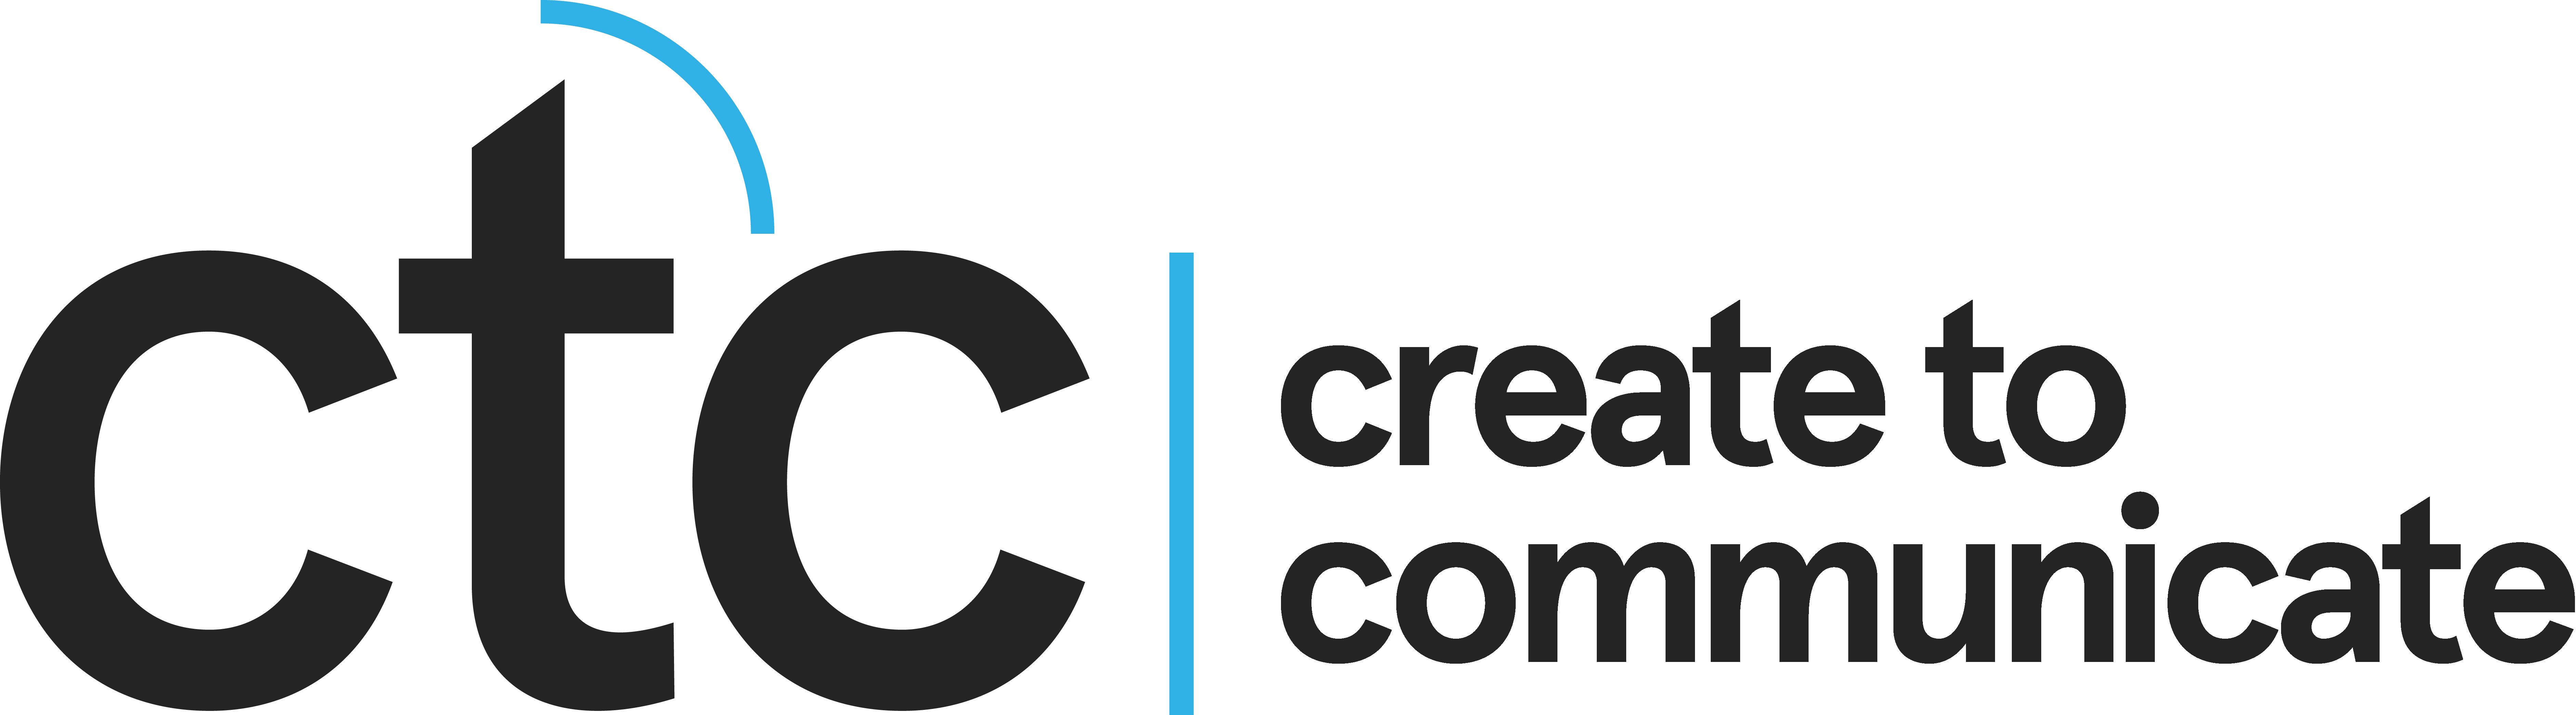 logo_ctc_create_to_communicate_black